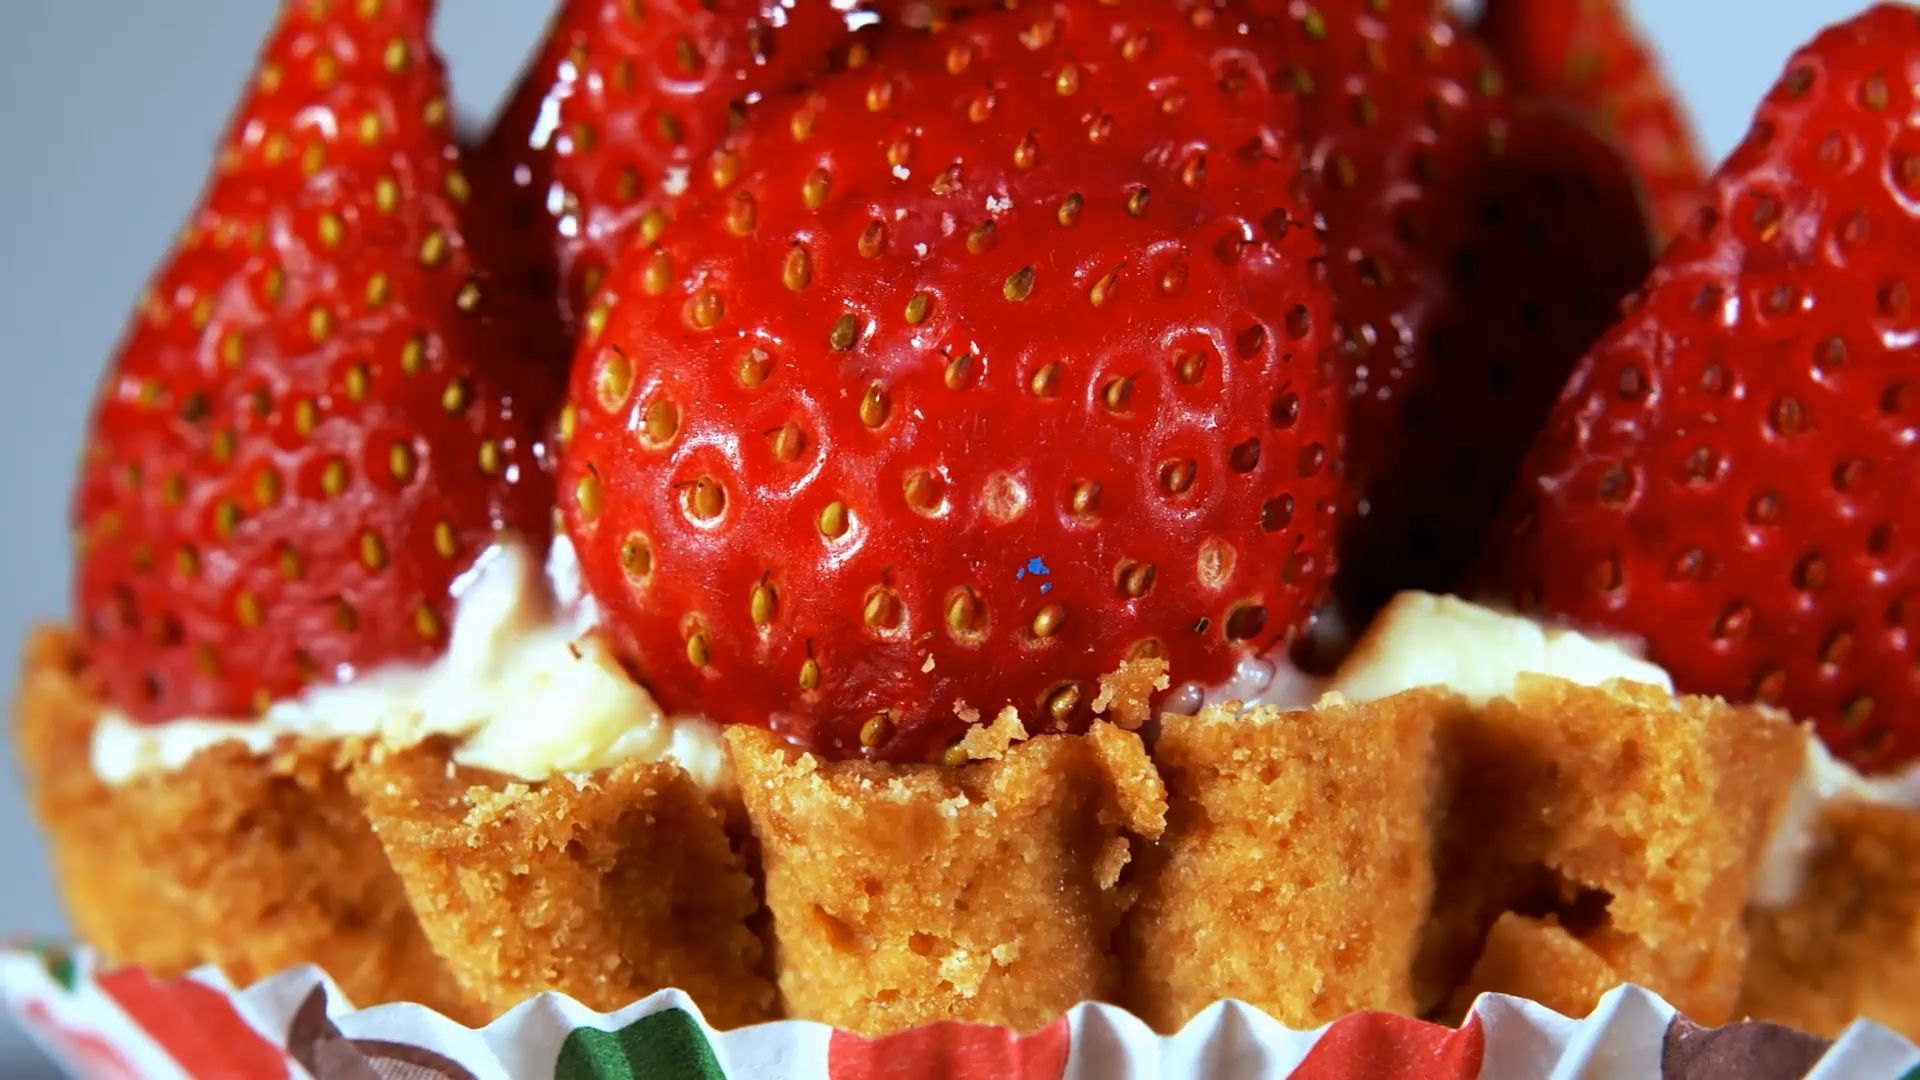 Make sure to eat strawberry cream pie today